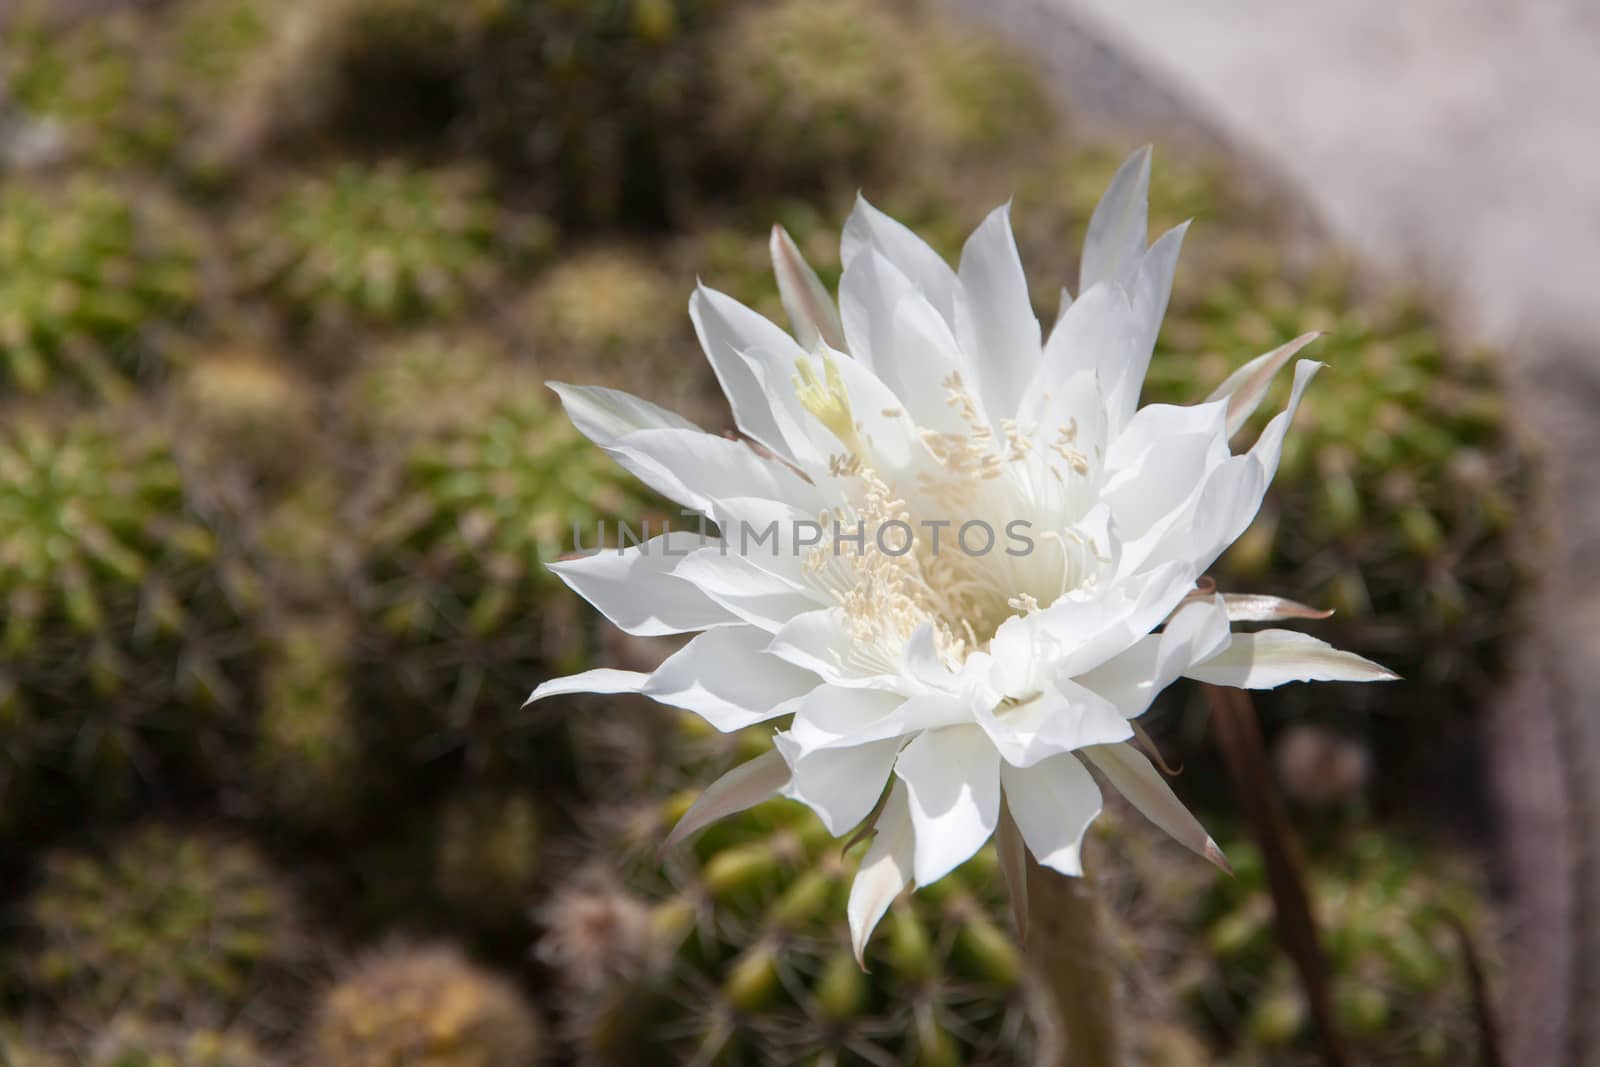 White cactus flower closeup under morning sun light. Nature background